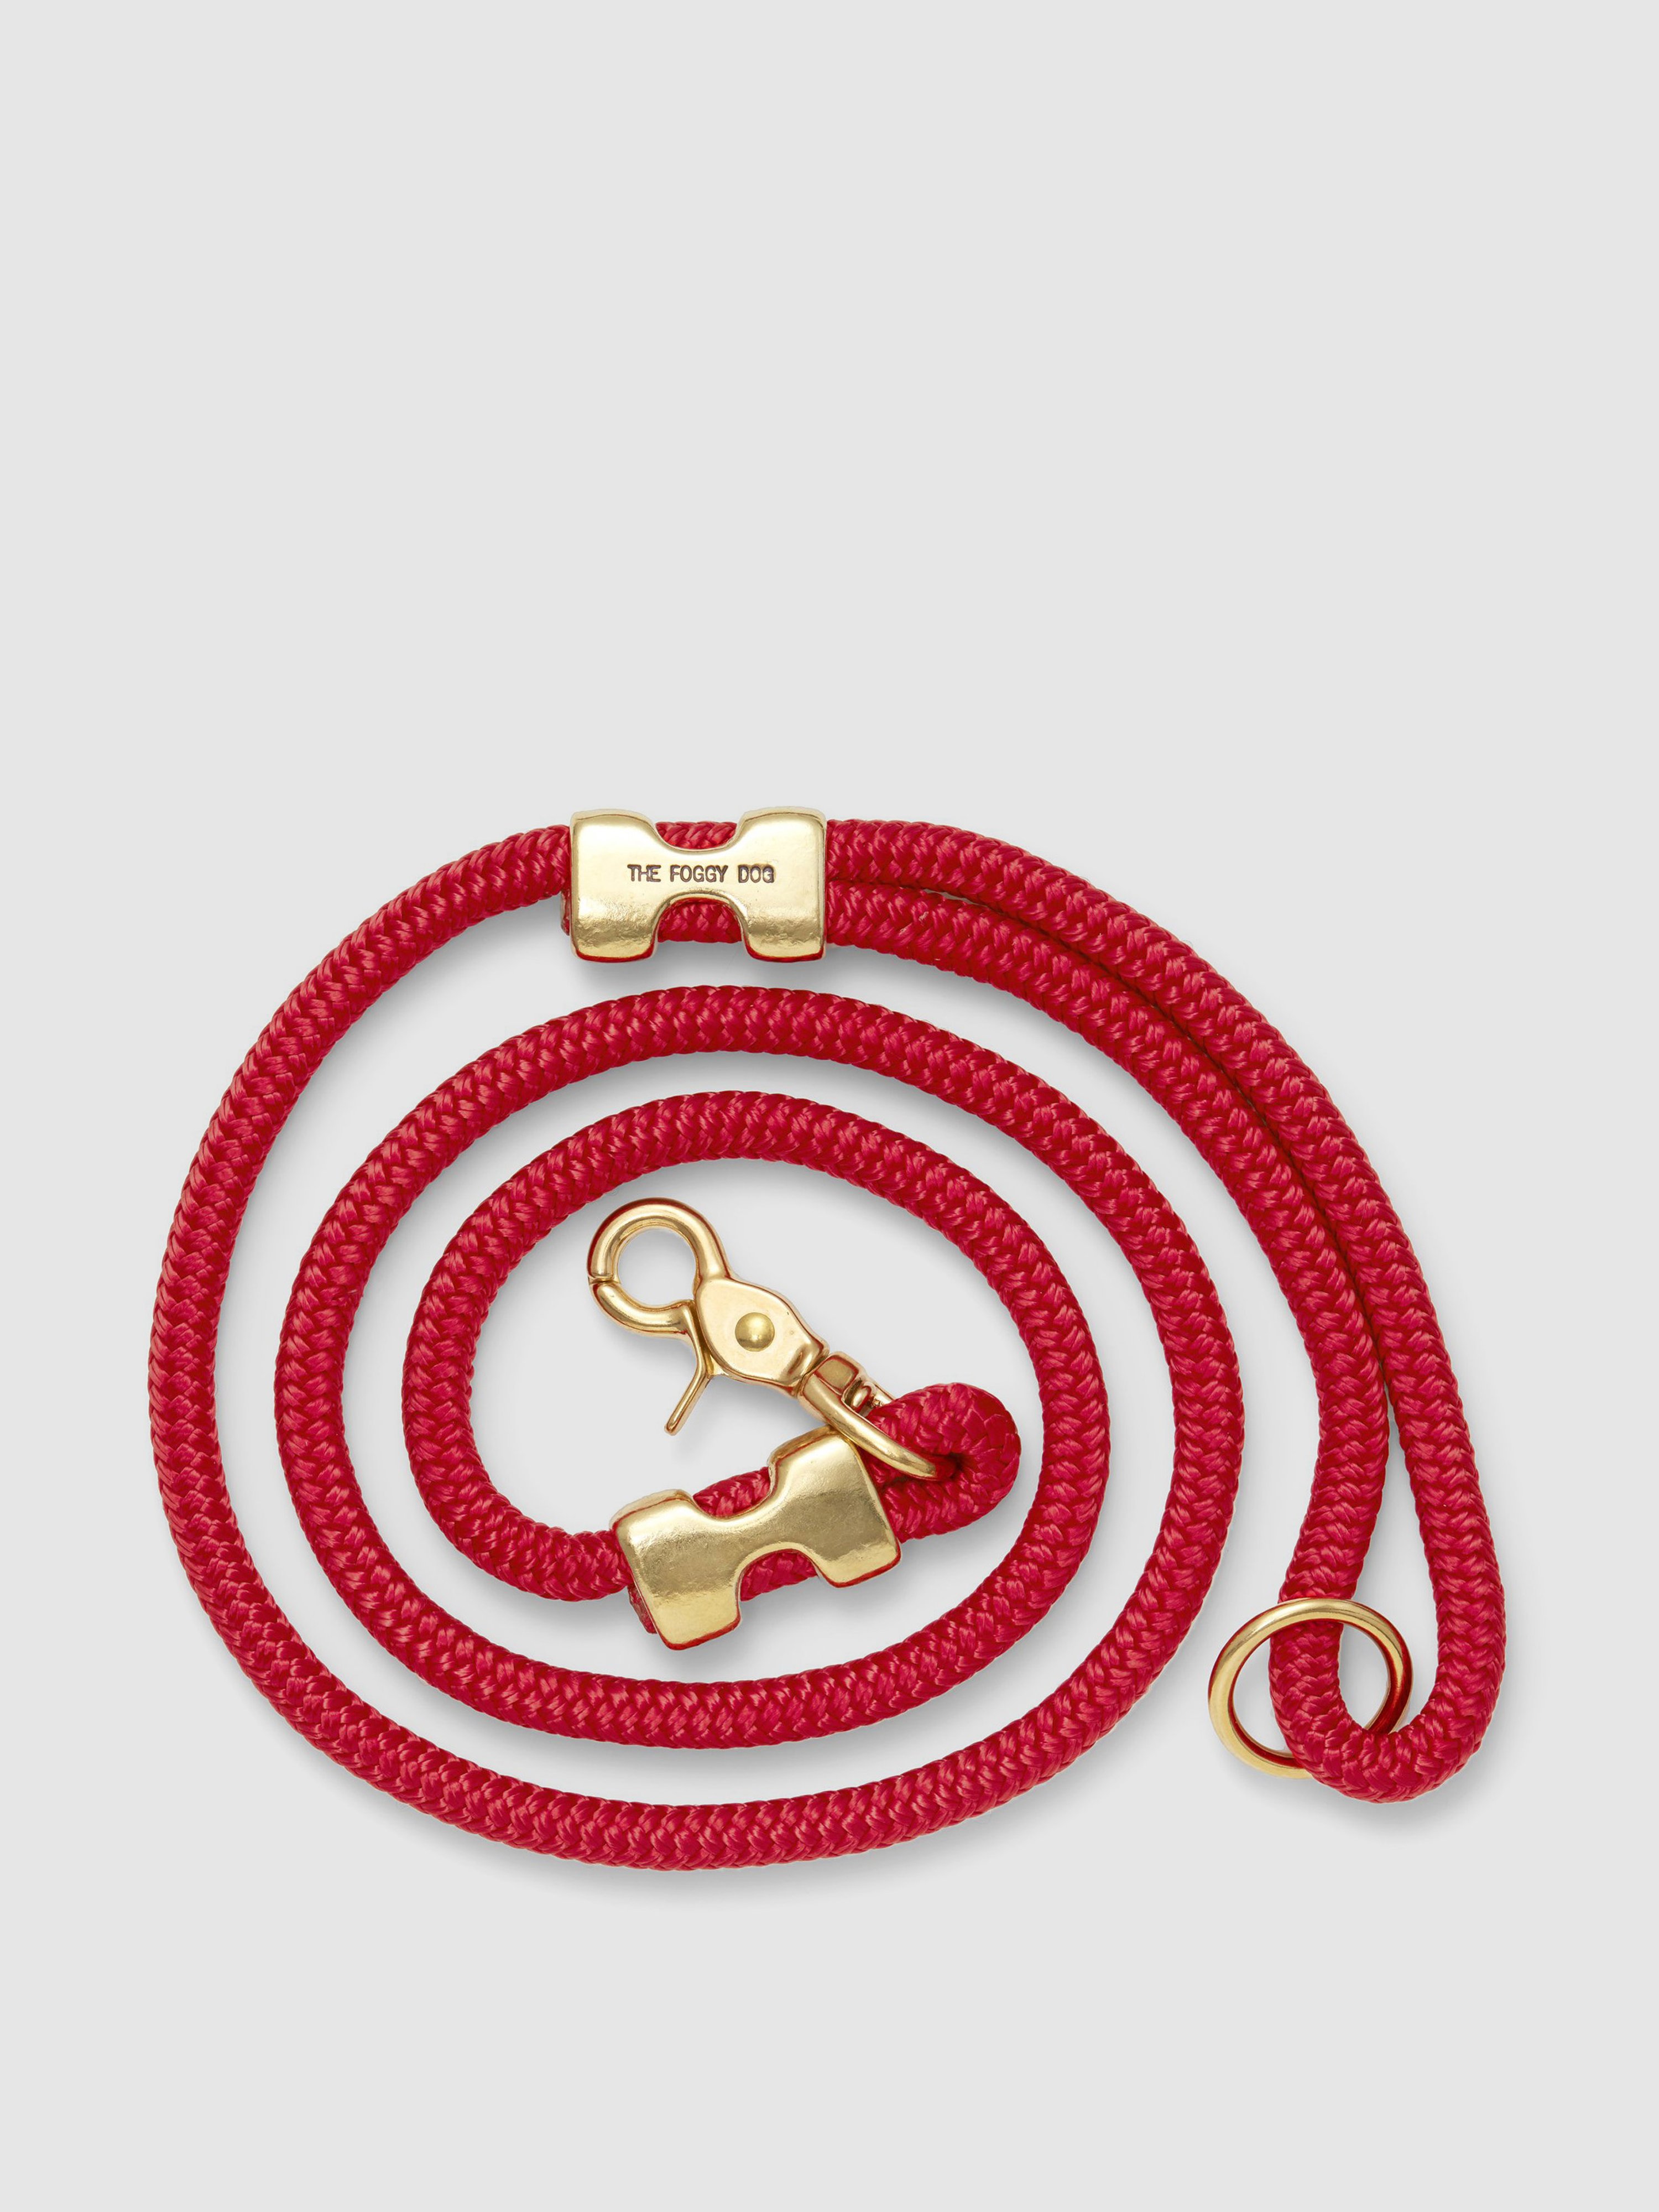 The Foggy Dog Ruby Marine Rope Dog Leash In Red